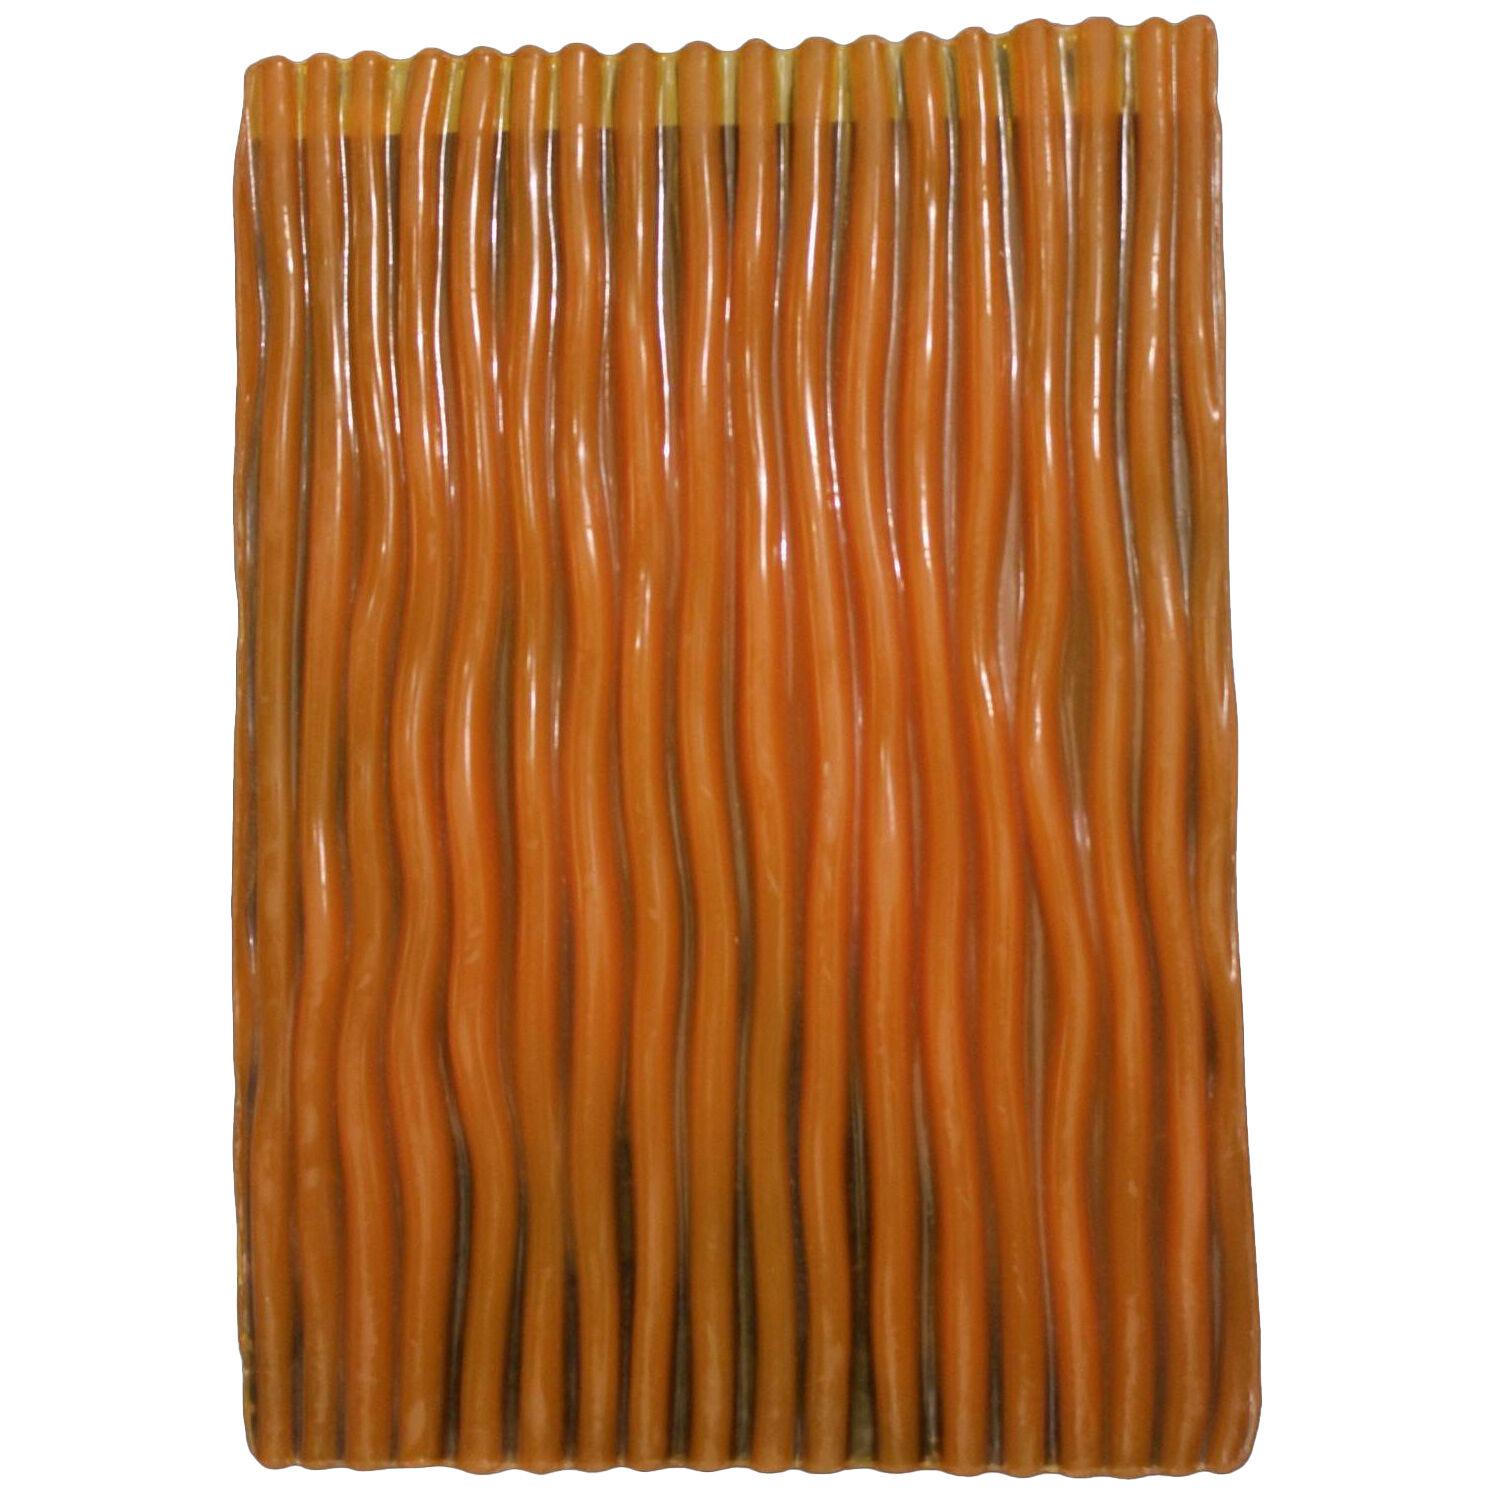 Kirk McCarthy "Tidal Phase" Orange Urethane Rubber Wall Sculpture 1998